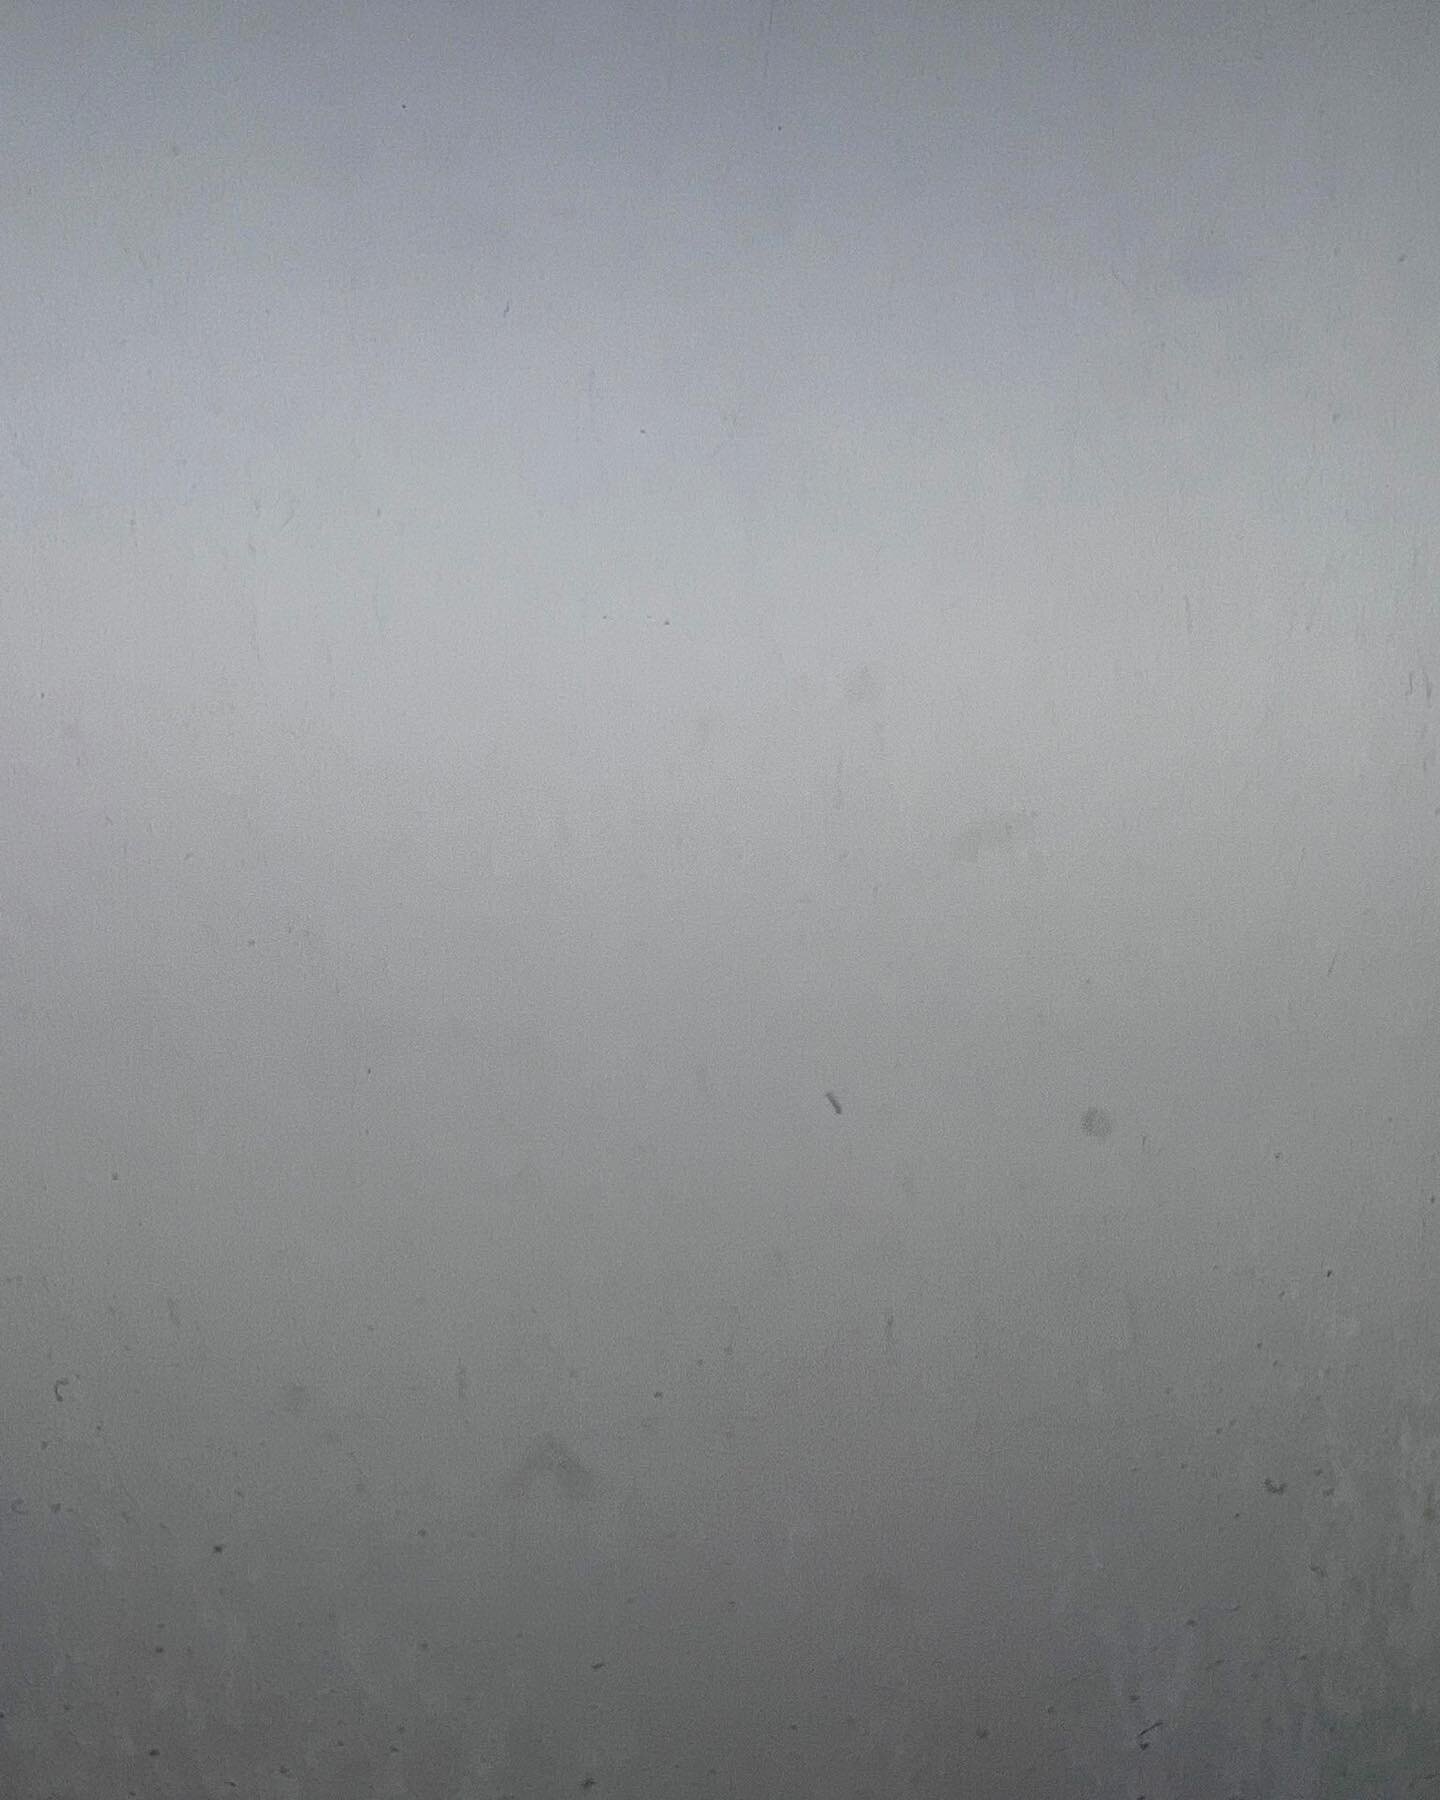 Thick advection fog above the seaway... Get those sound signals ready! 🌫️&mdash; &bull;&bull;⛵️

#fog #sailing #greatlakes #stlawrenceriver #stlawrenceseaway #benautical